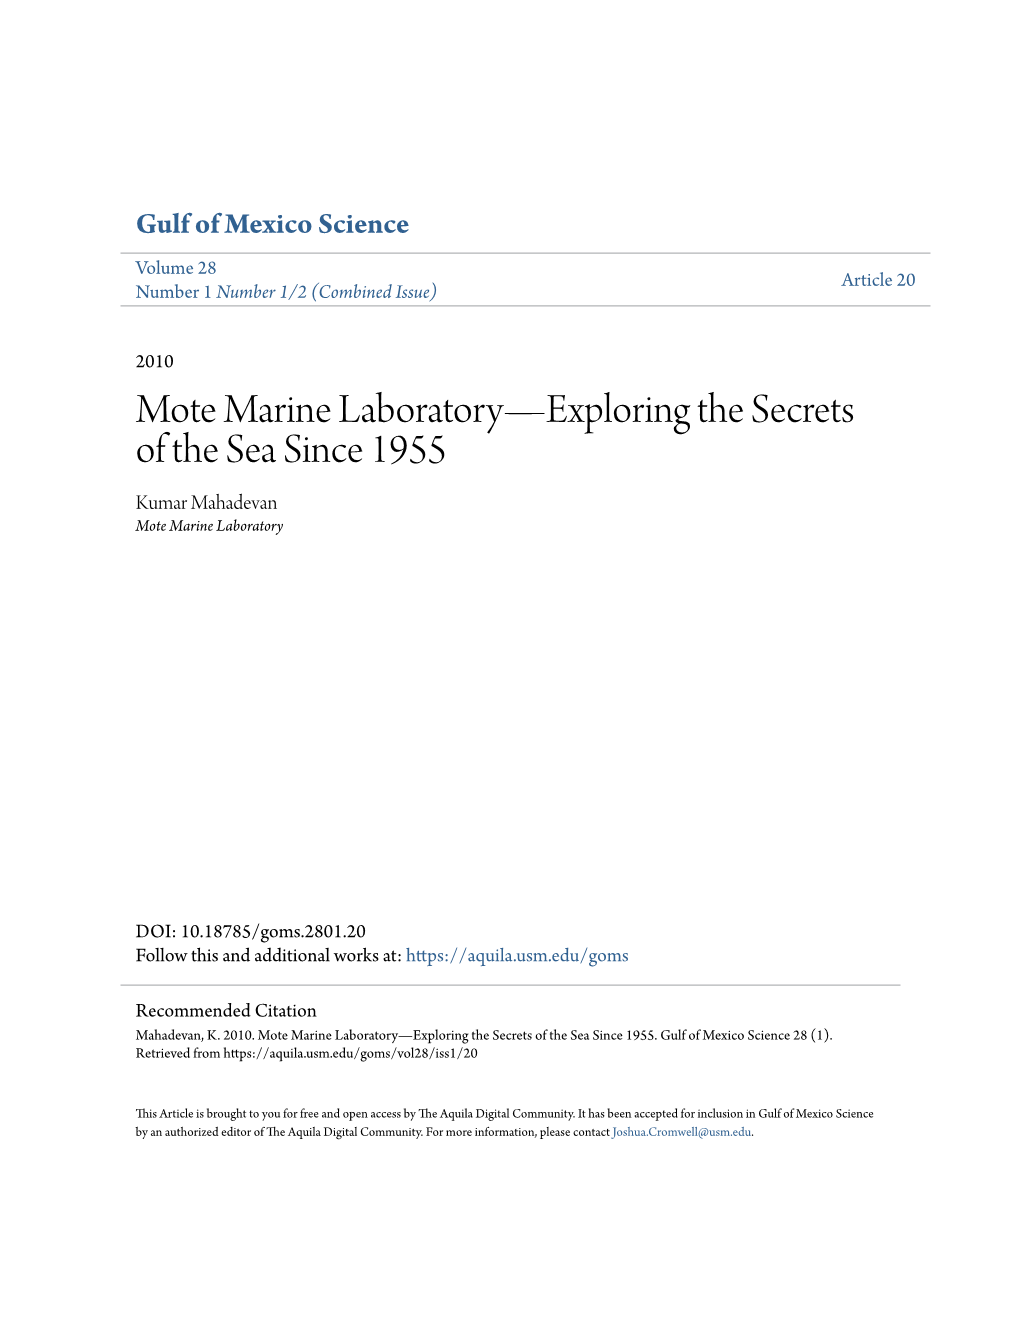 Mote Marine Laboratoryâ•Flexploring the Secrets of the Sea Since 1955